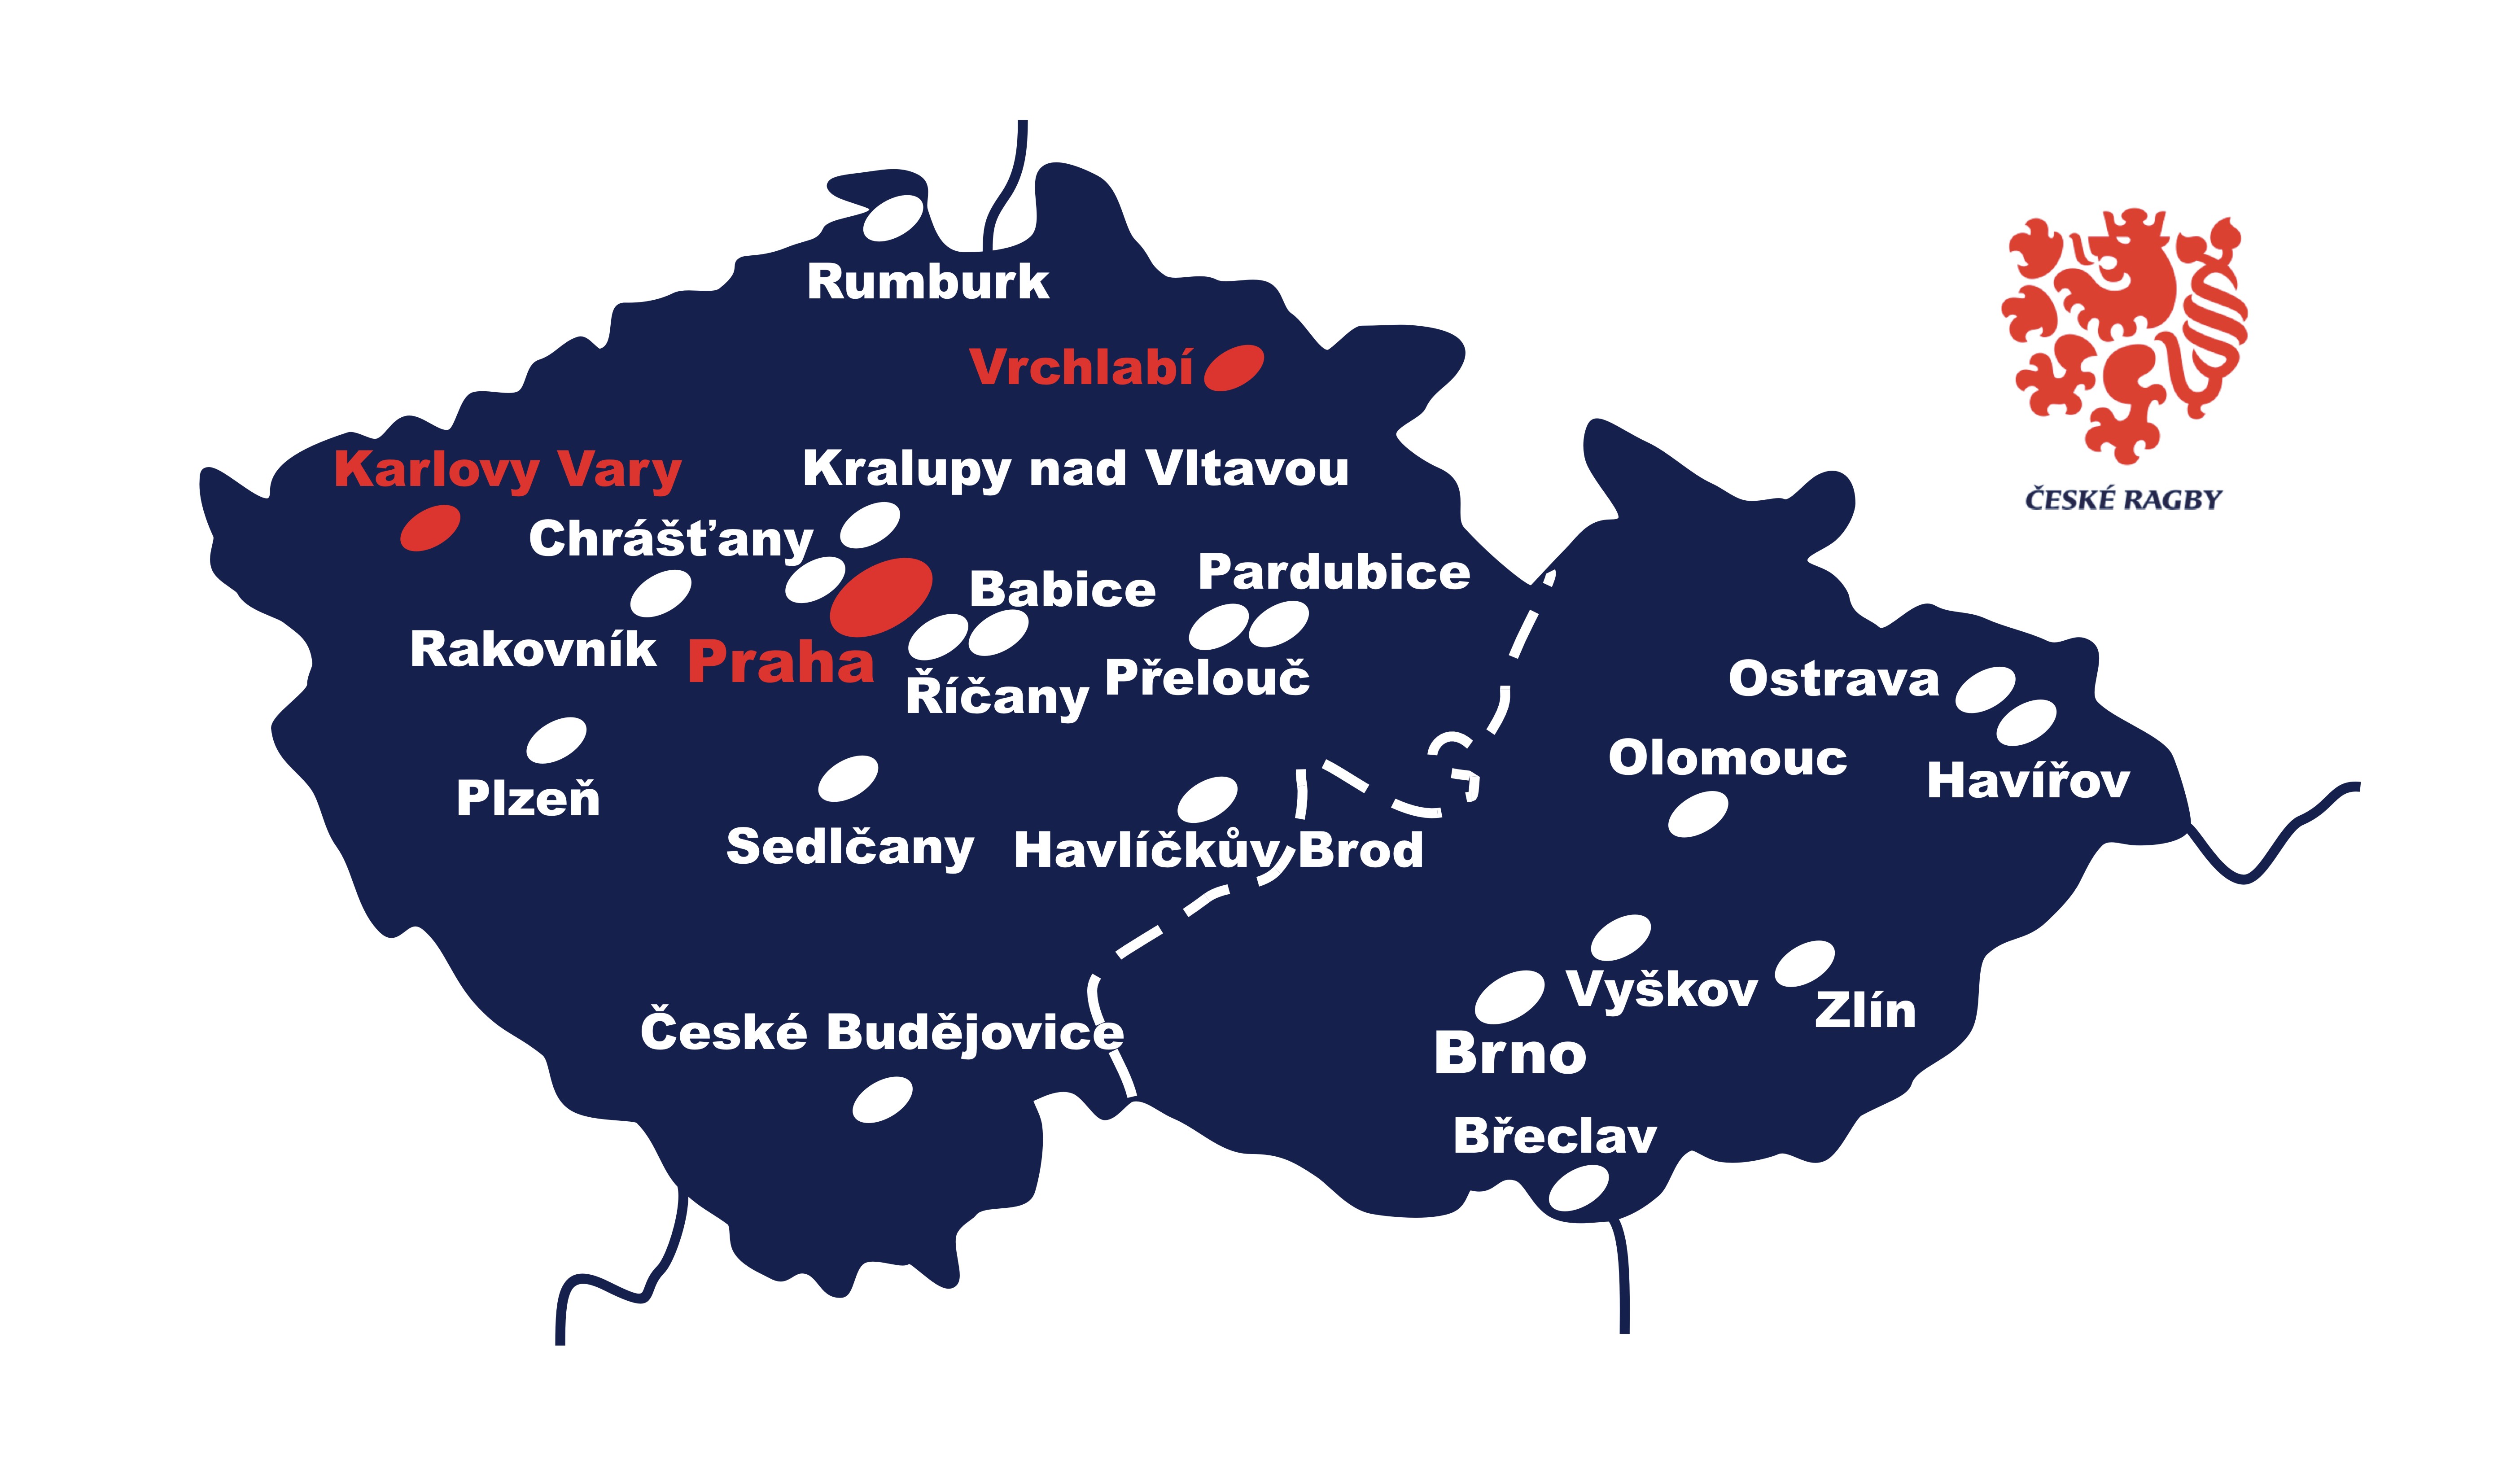 mapa czech rugby.jpg